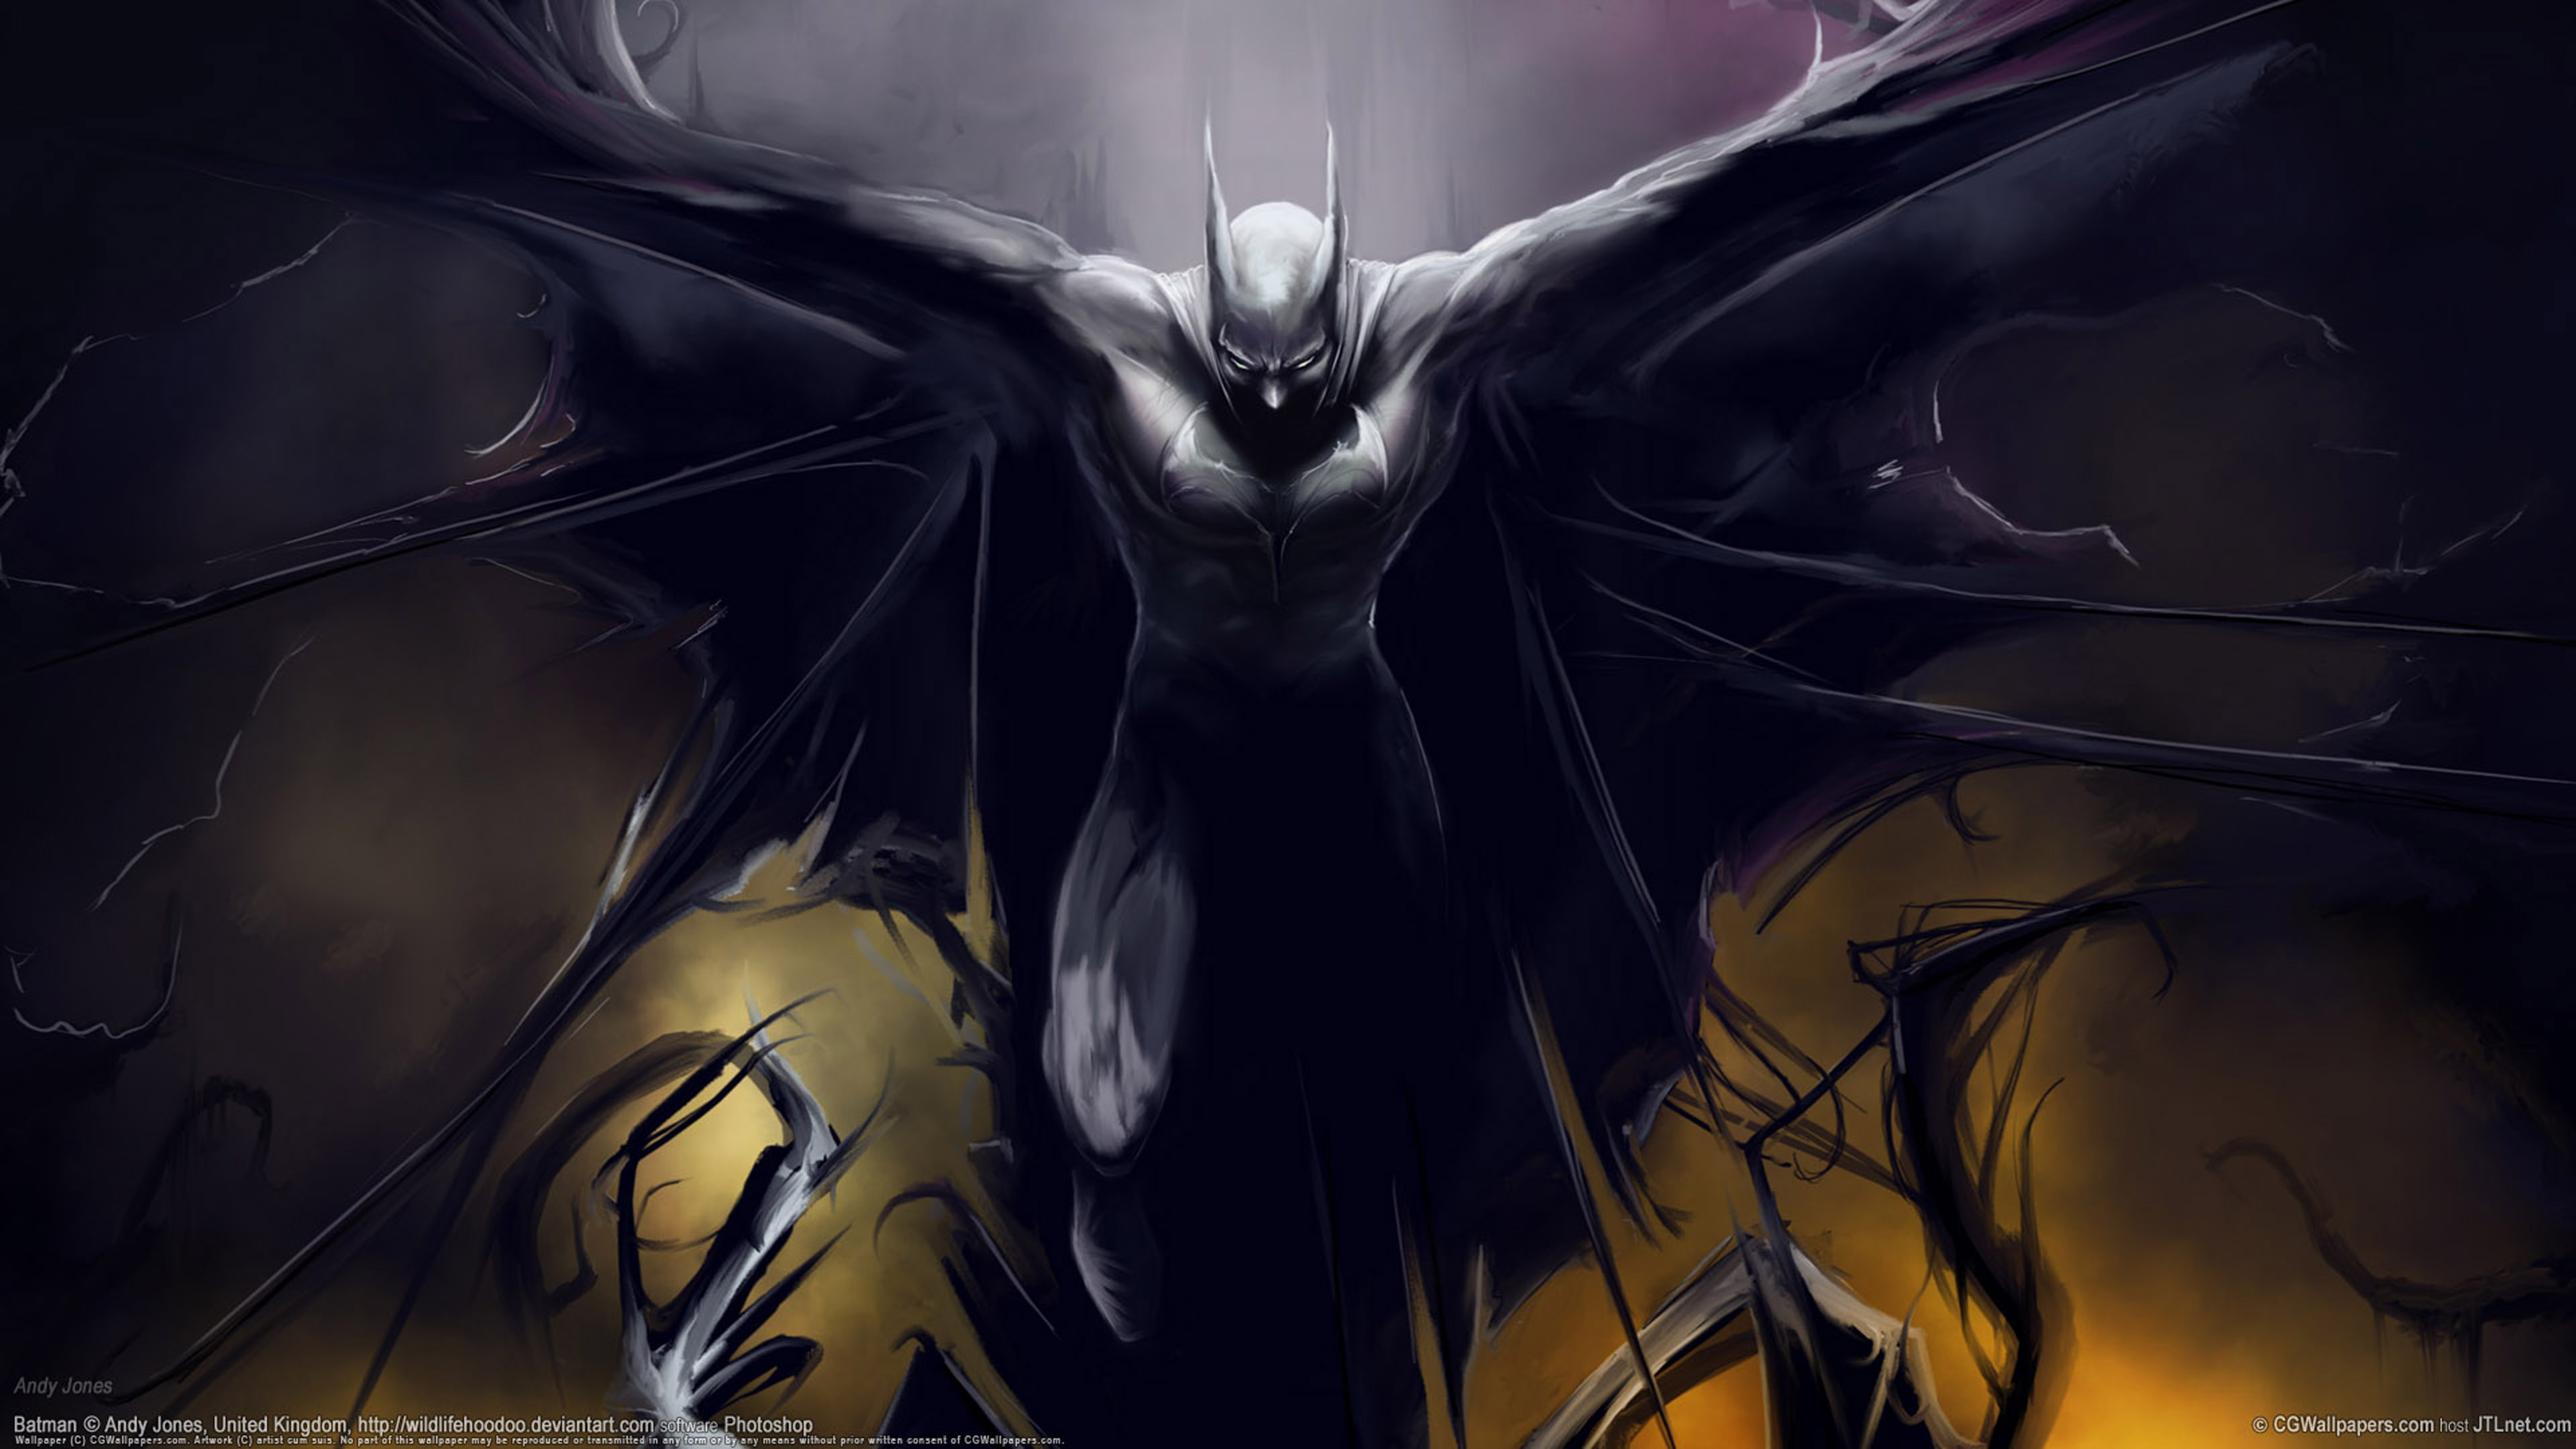 batman art wallpaper,cg artwork,fictional character,demon,batman,fiction